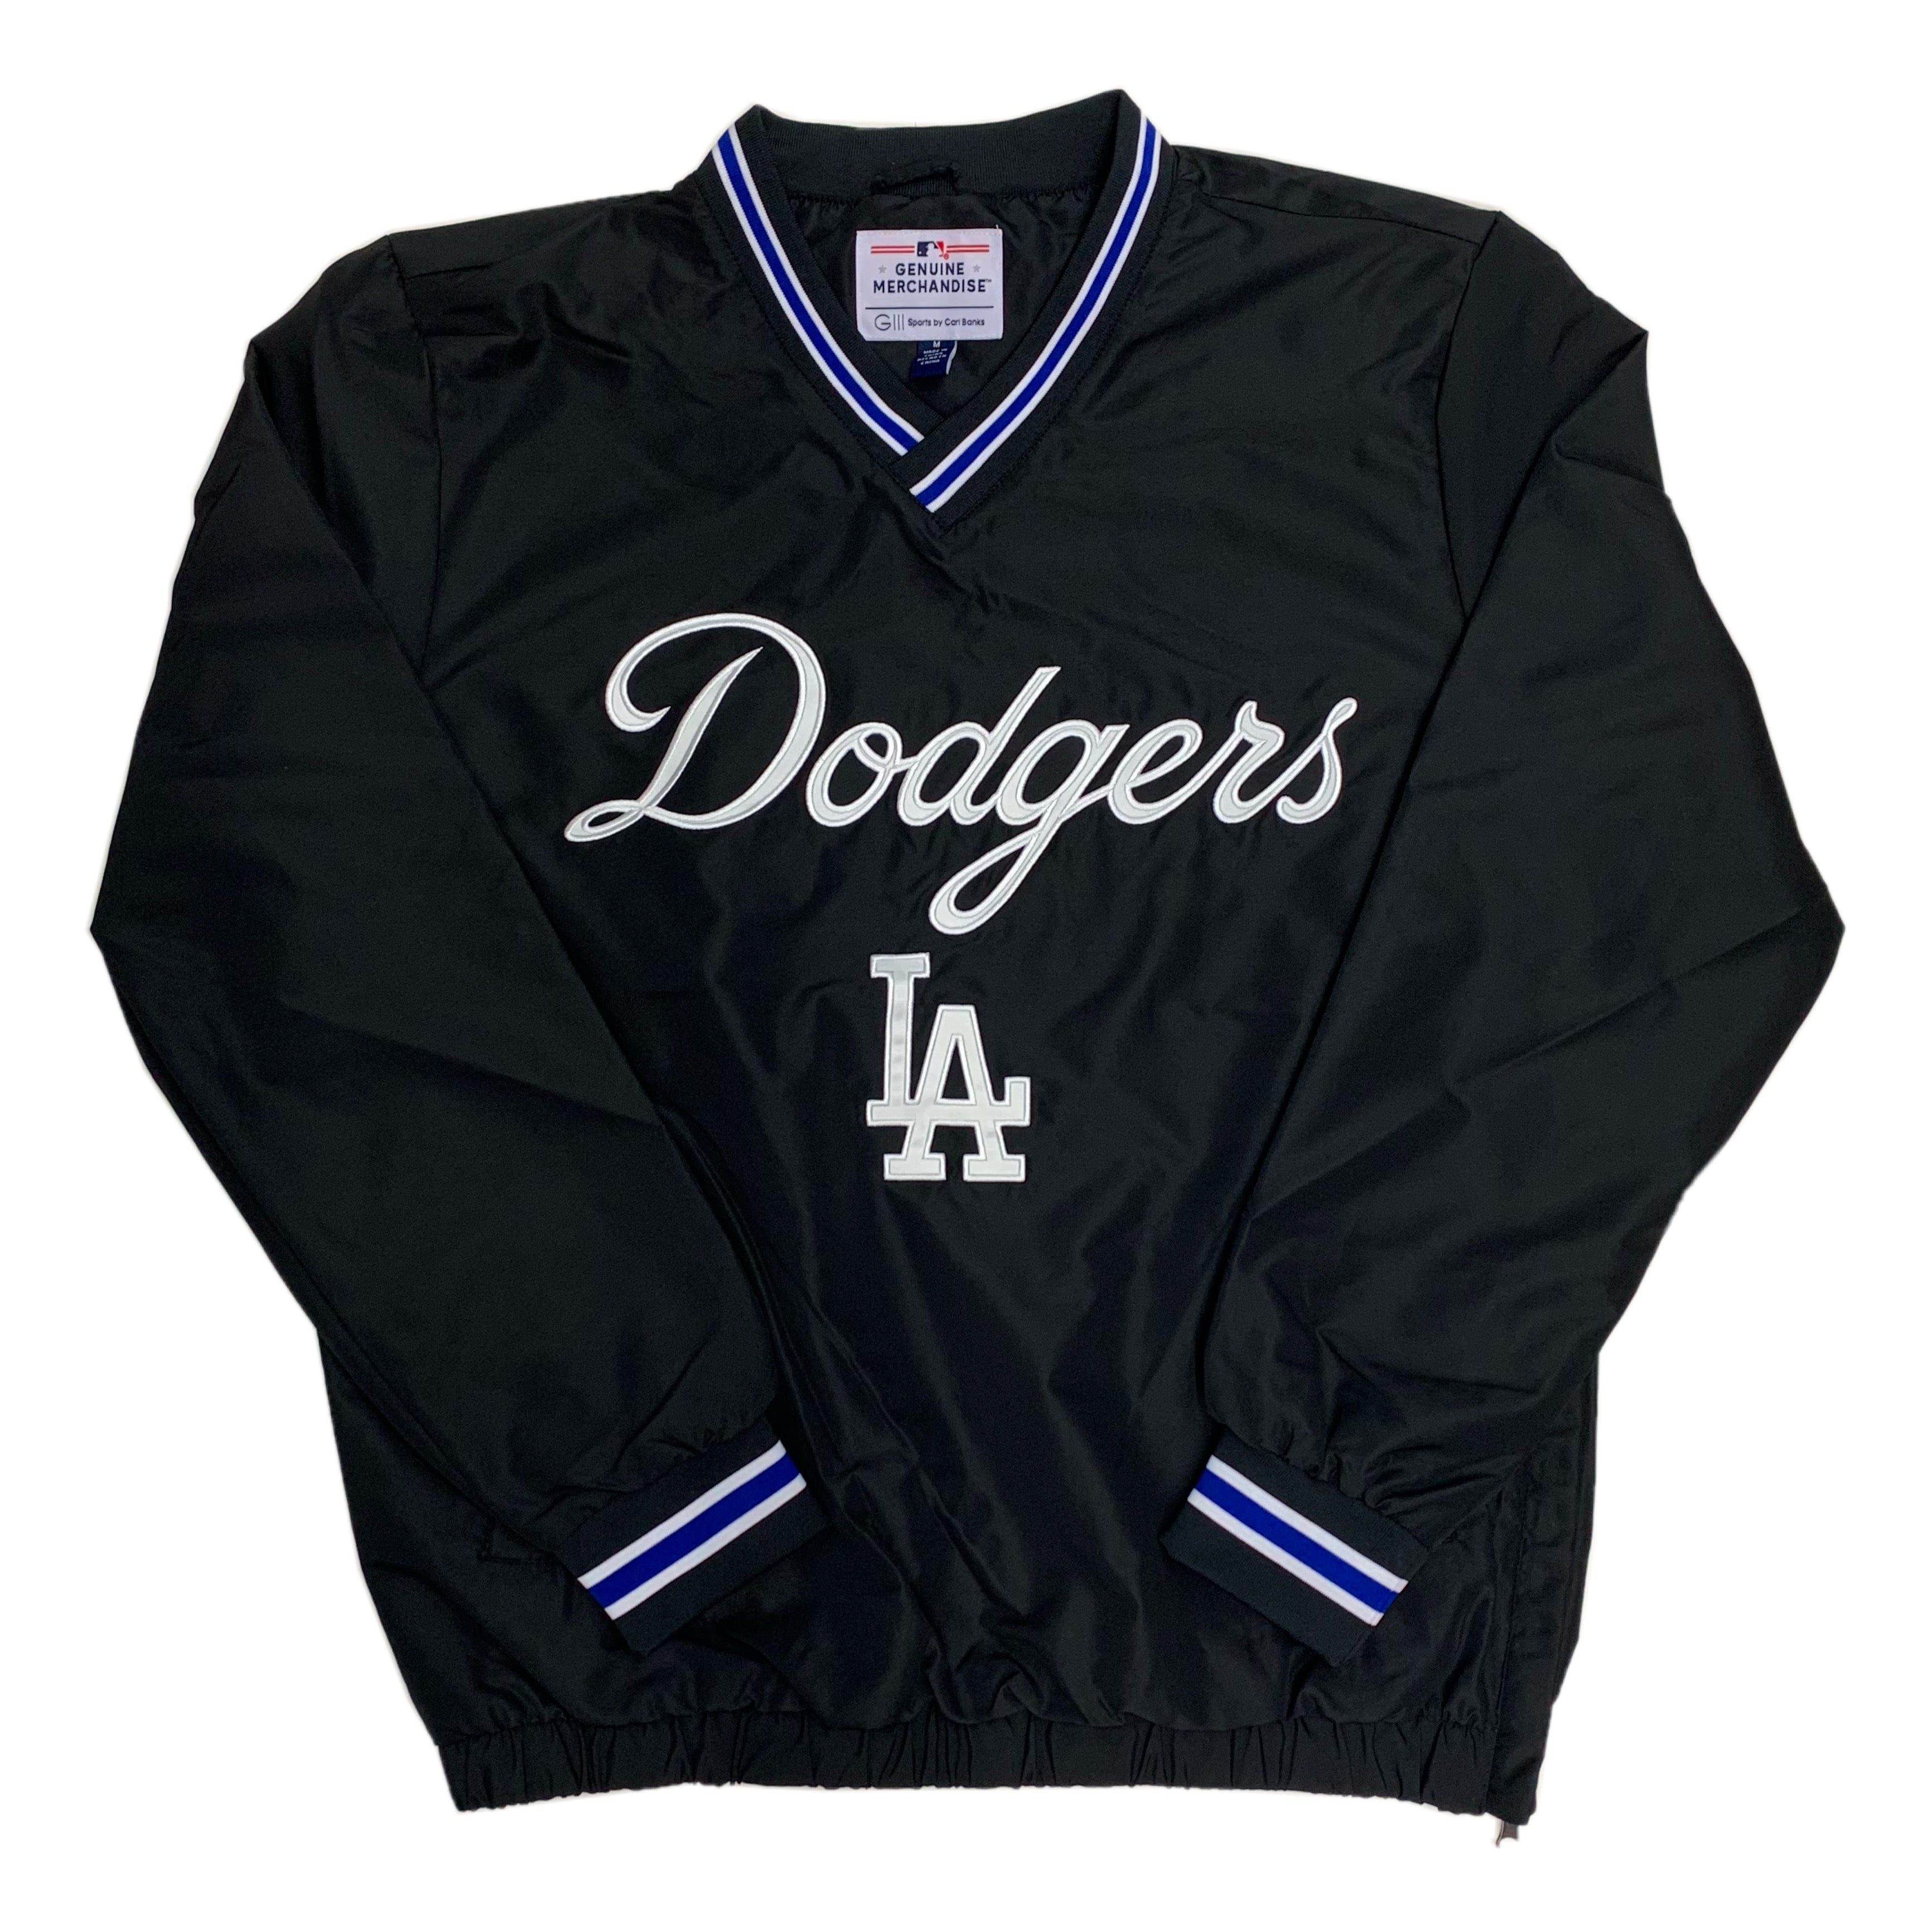 Dodgers Jacket Men Large Adult Blue MiLB Minor League Baseball